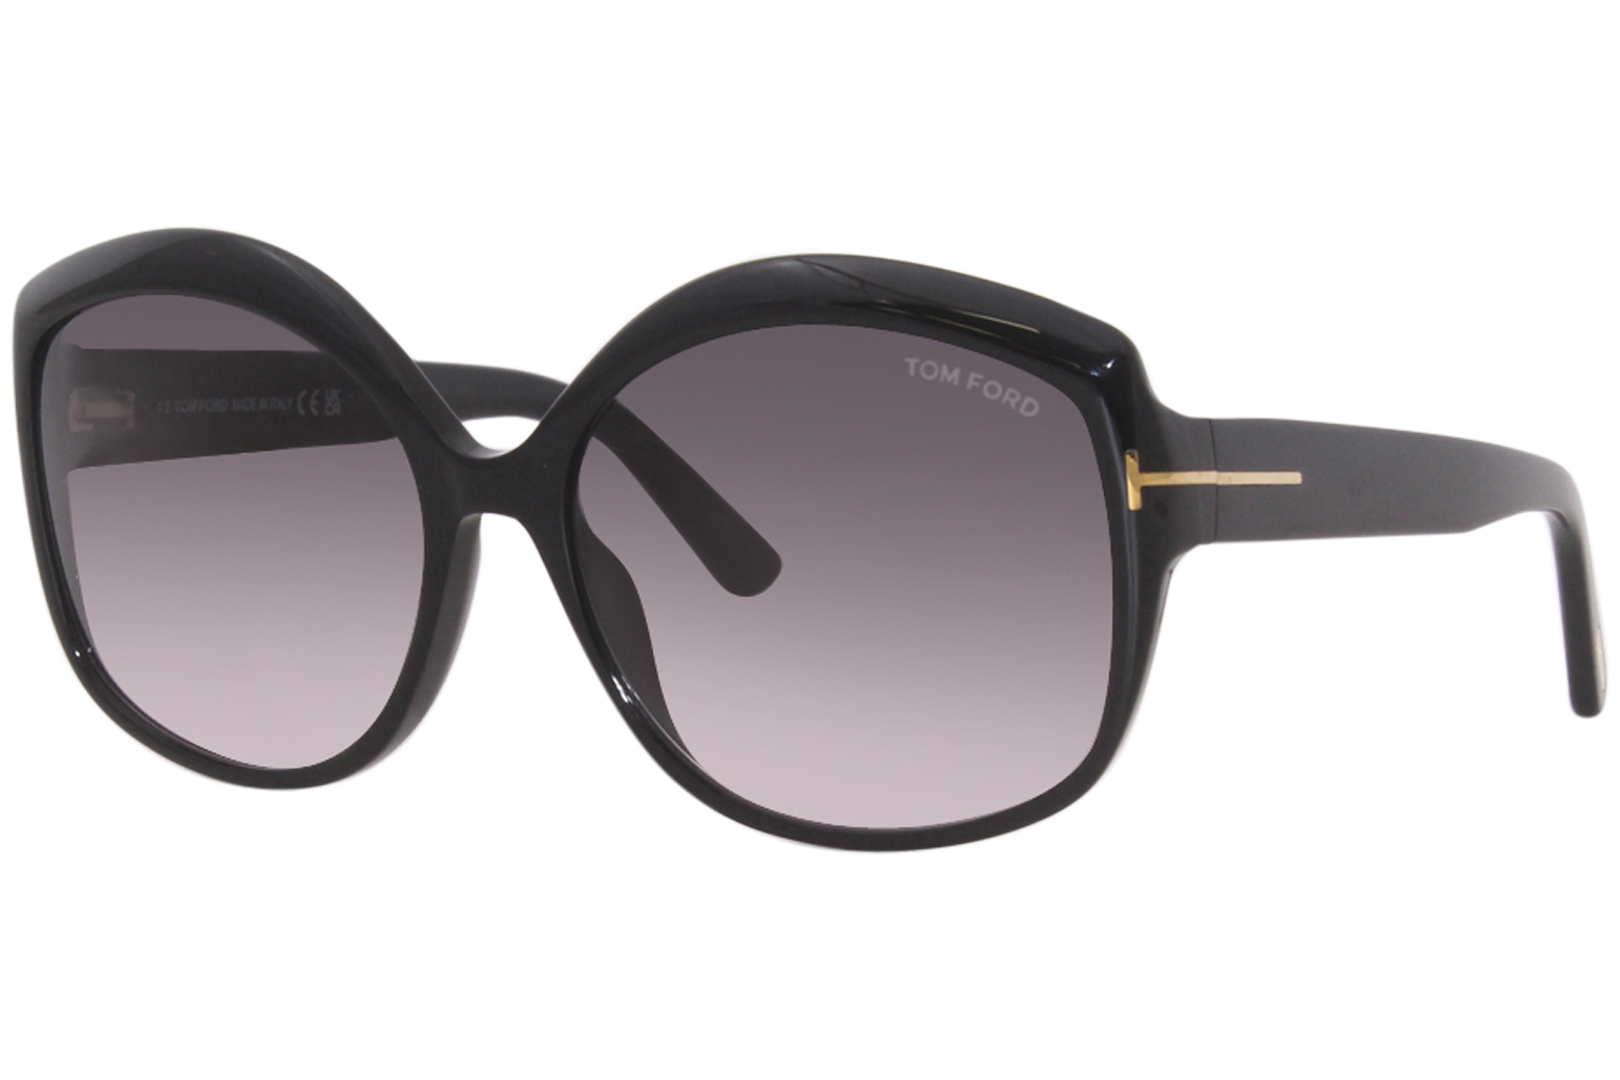 Tom Ford Chiara-02 TF919 01B Sunglasses Women's Black/Gradient Grey ...